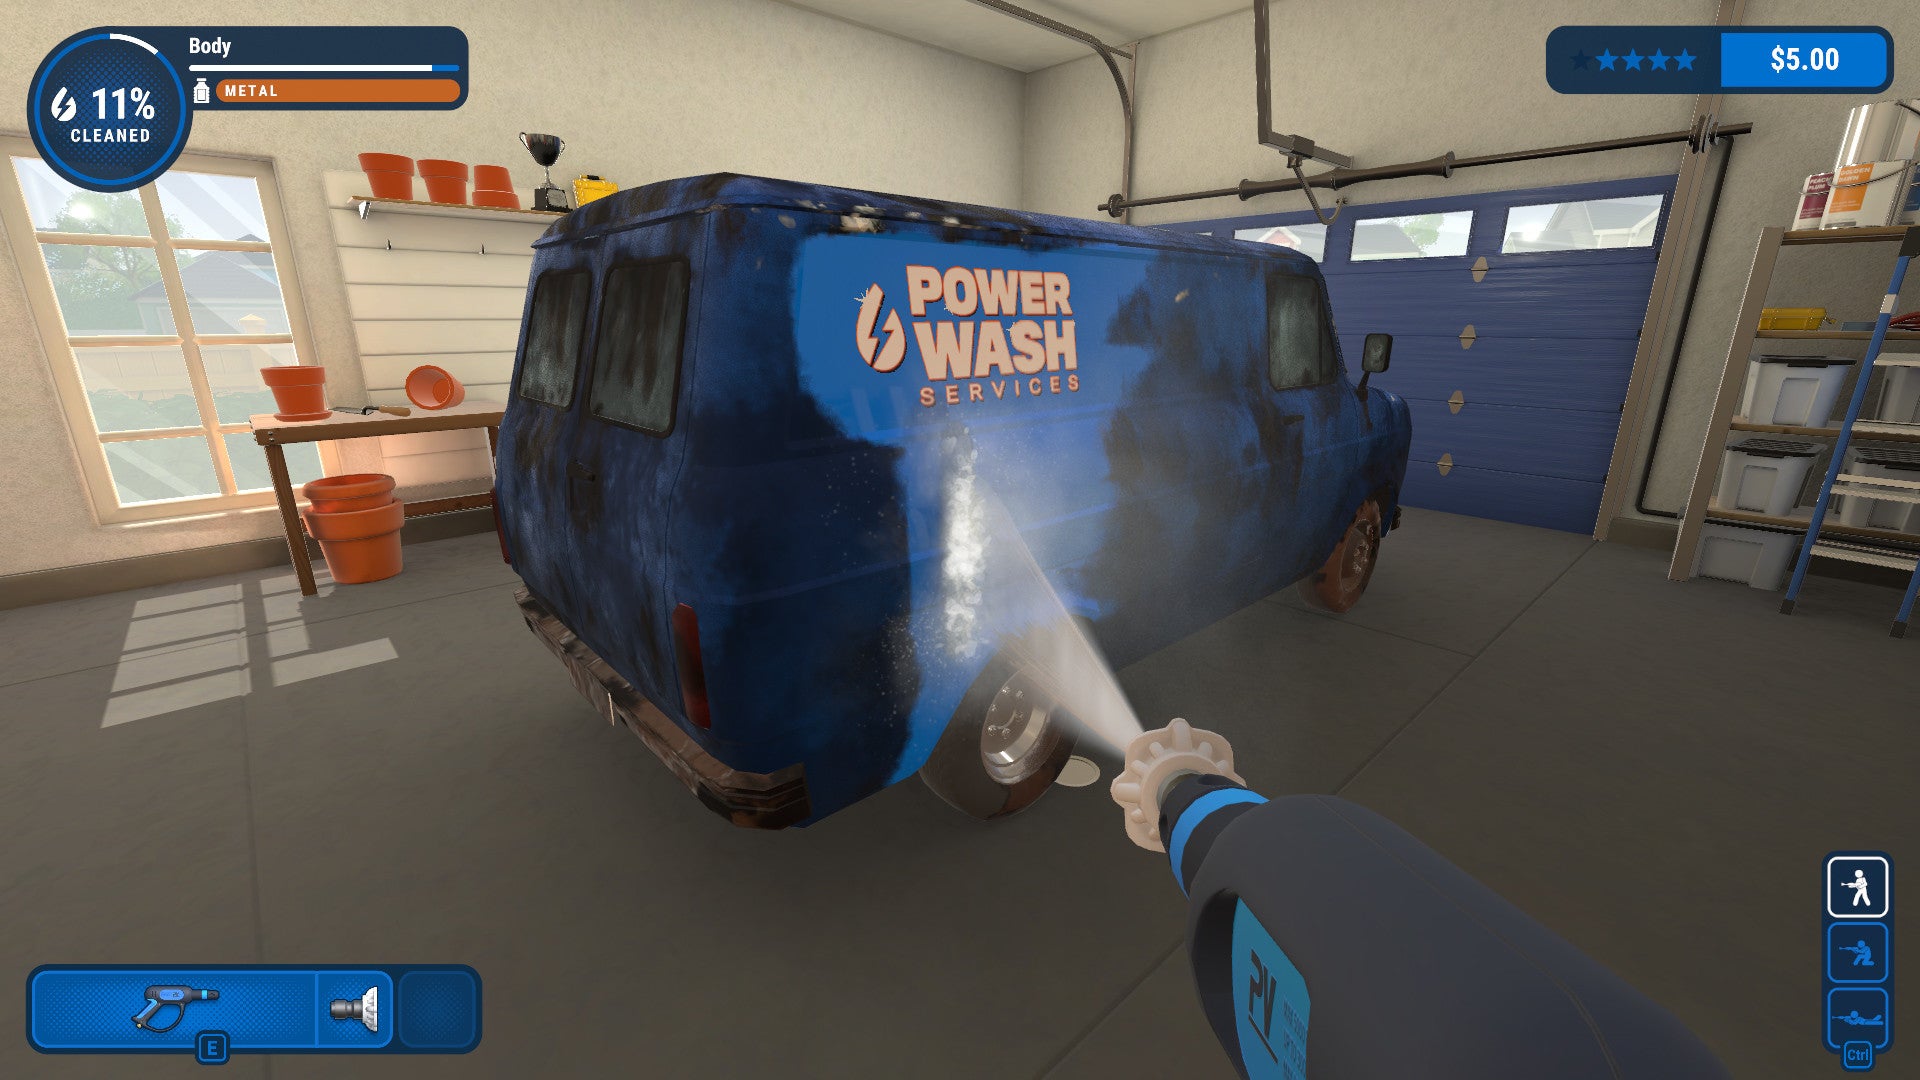 Powerwashing a powerwashing company van in a PowerWash Simulator screenshot.